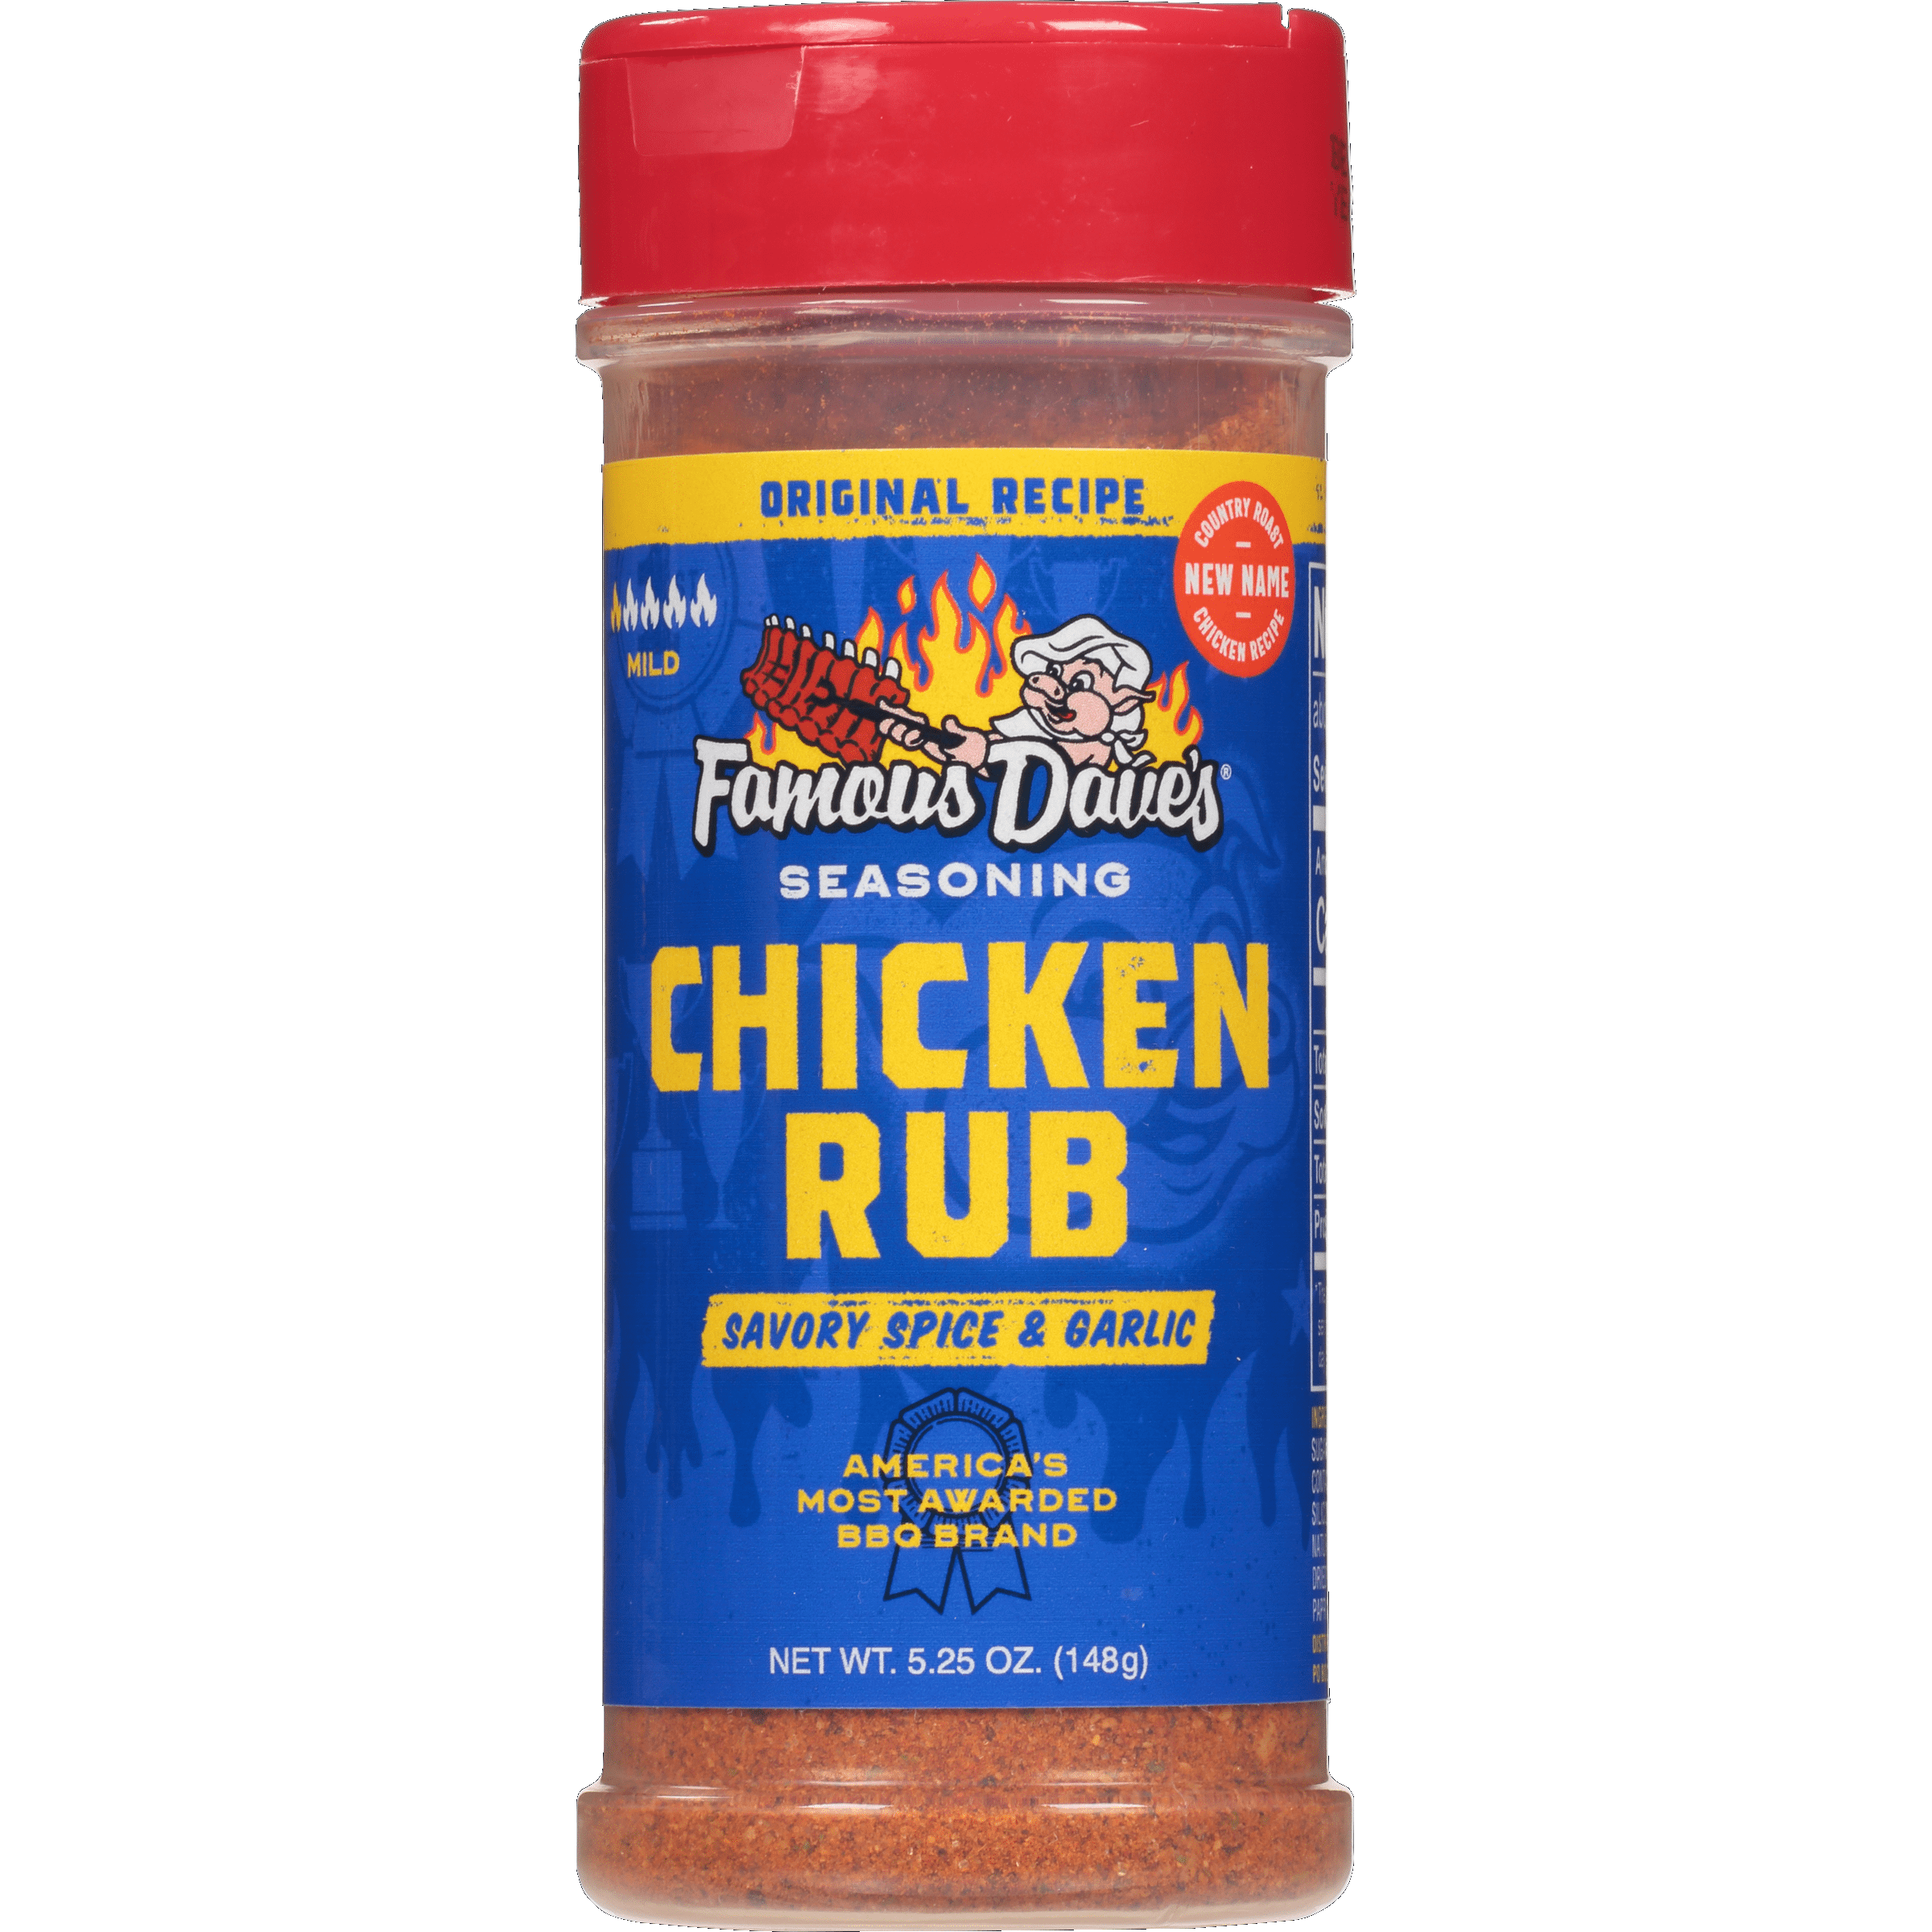 The Best Chicken Seasoning on the Market